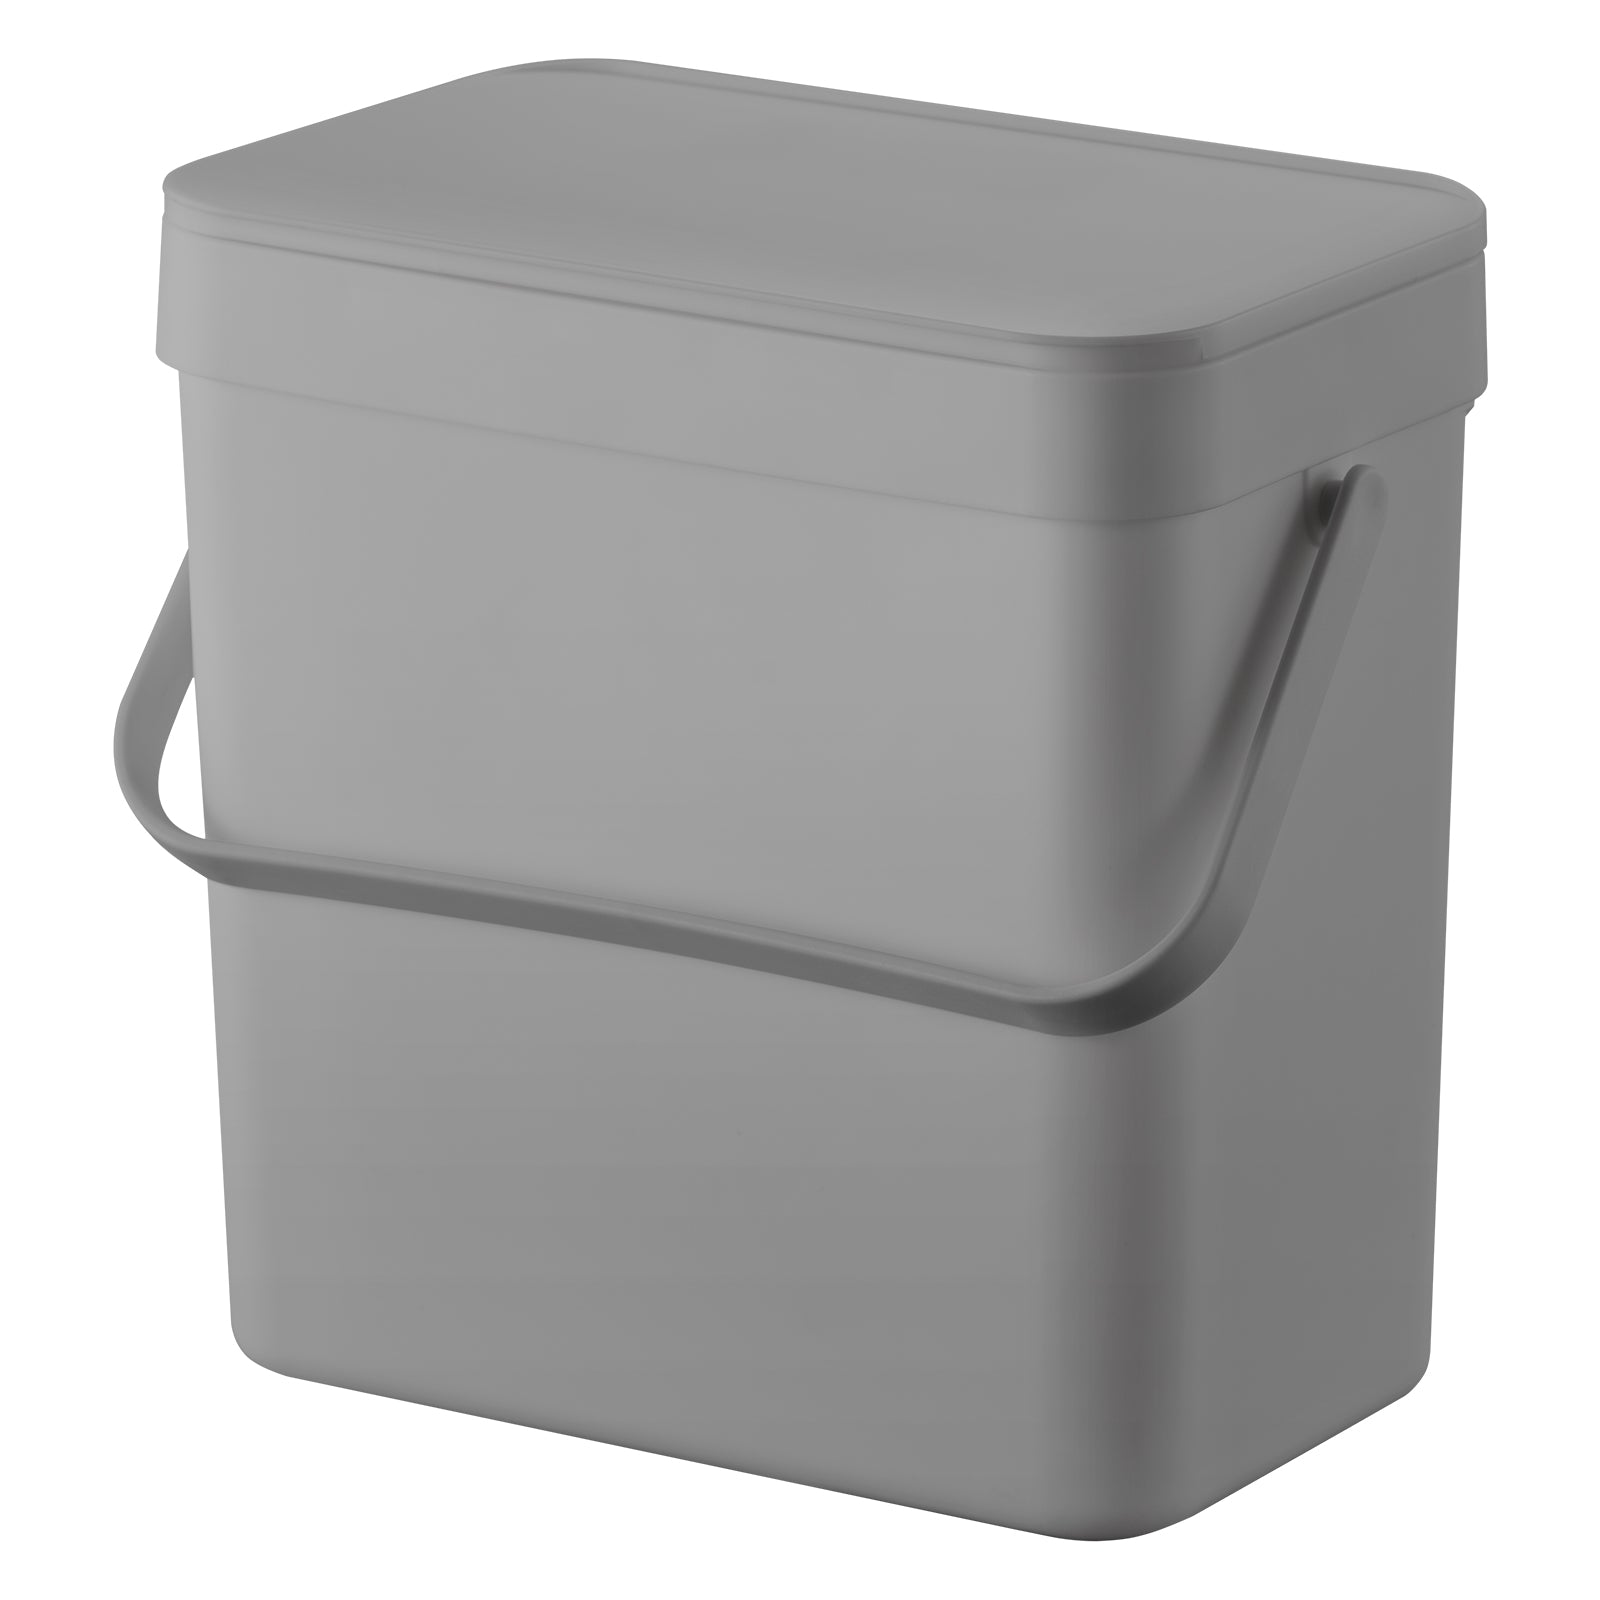 Puro II Compost Bin with Swing Lid - White 5L / 1.32 Gal